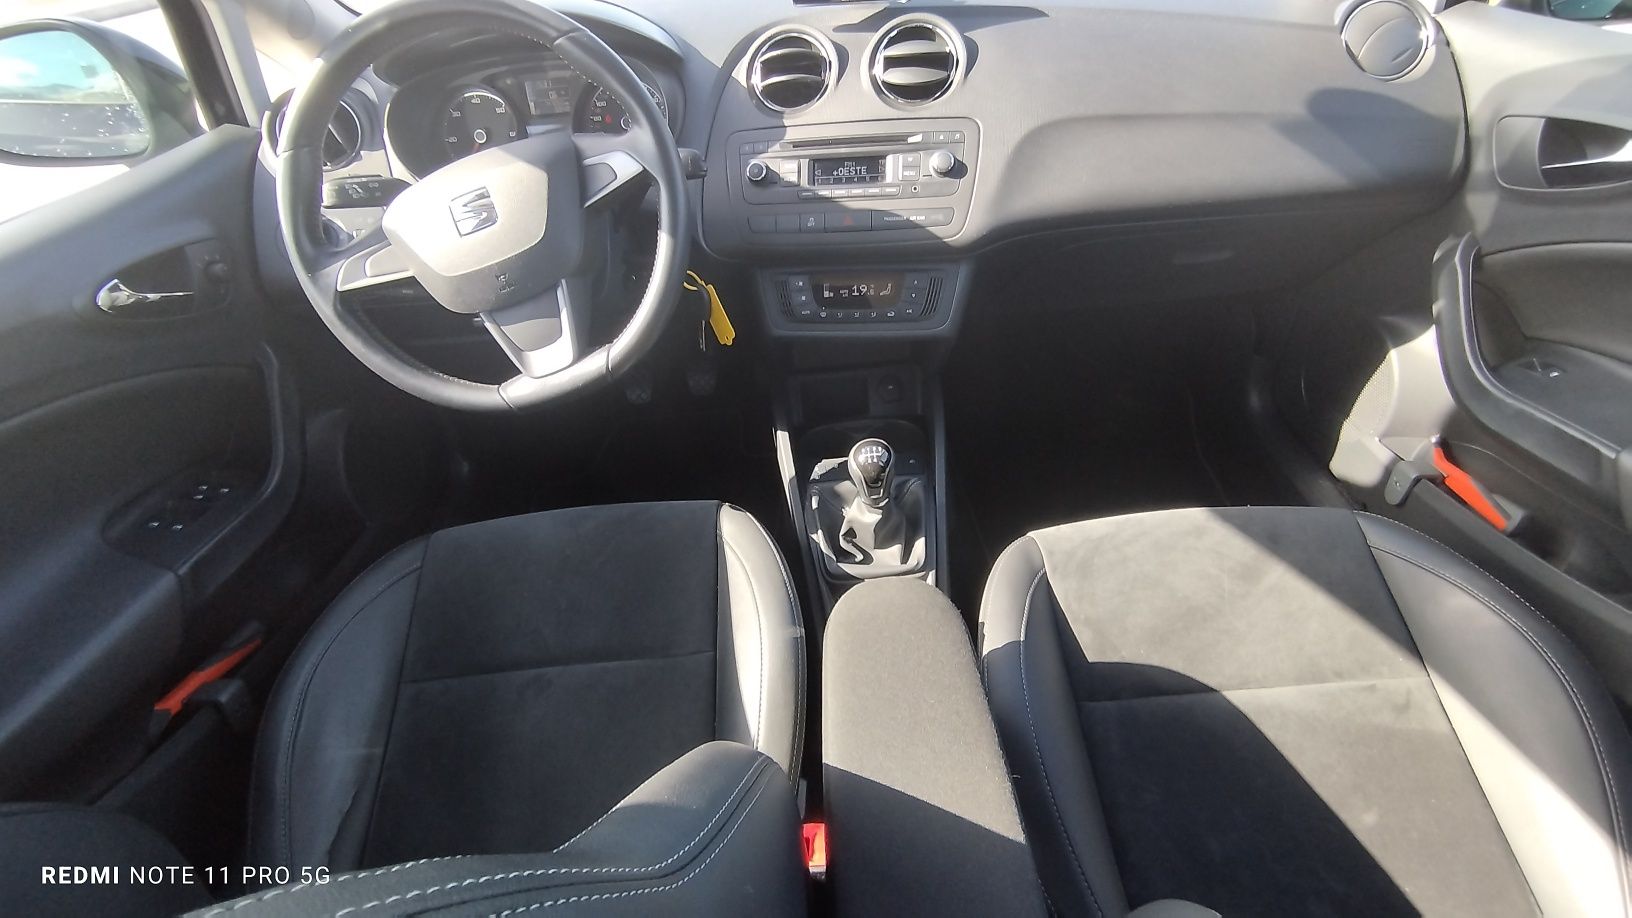 SEAT Ibiza ST 1.2 TDI 2014 edição 30 anos